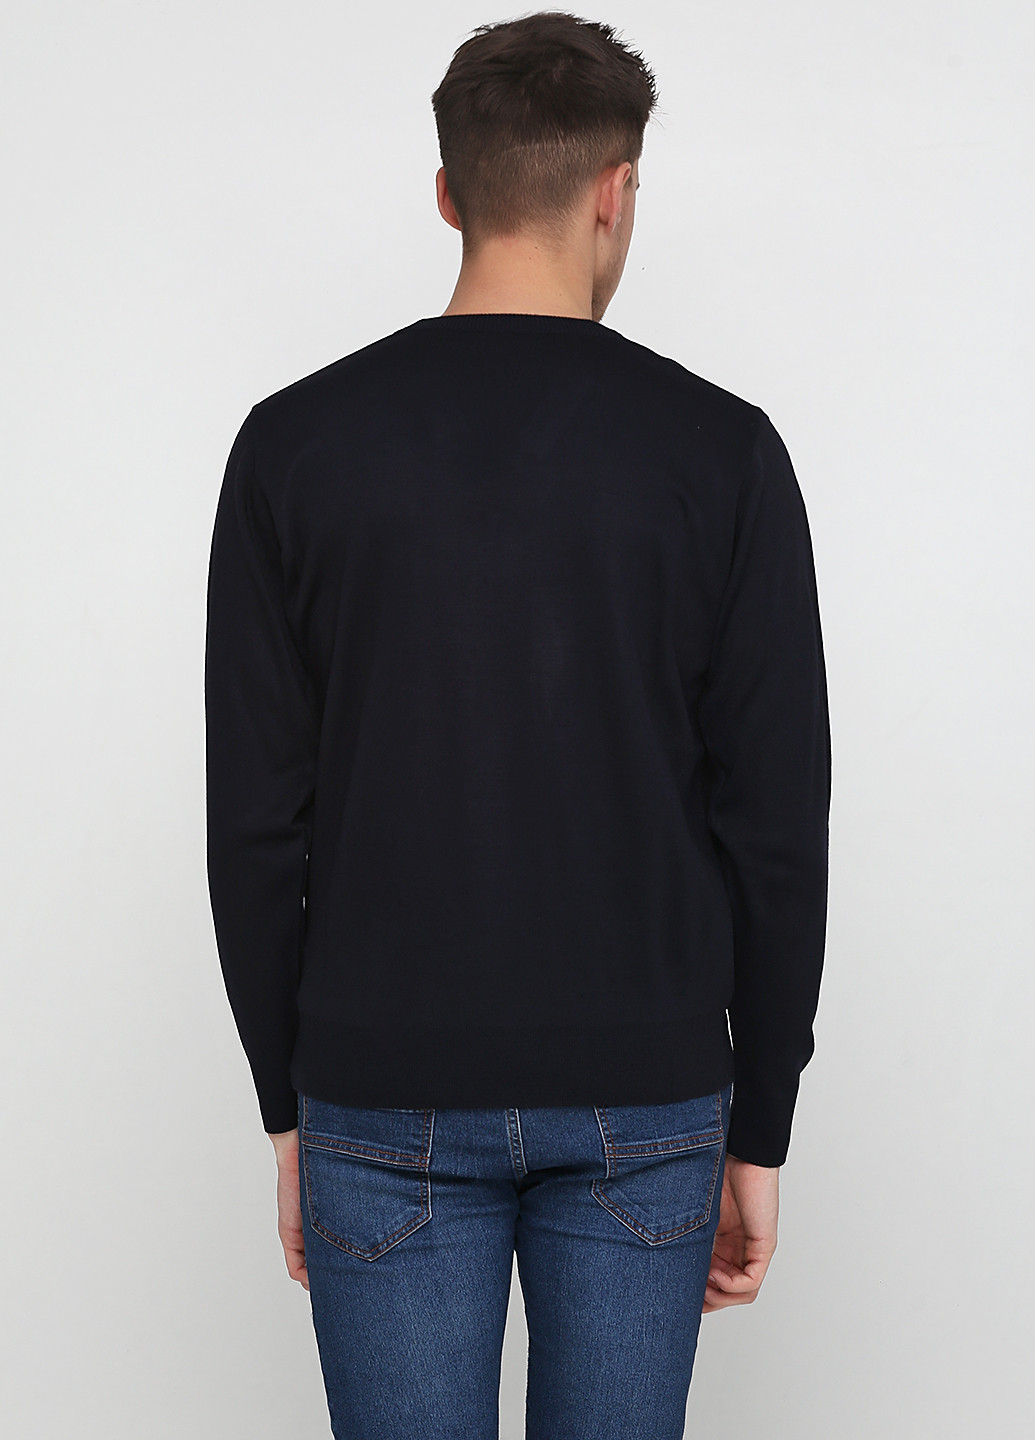 Темно-синий демисезонный пуловер пуловер Sunteks